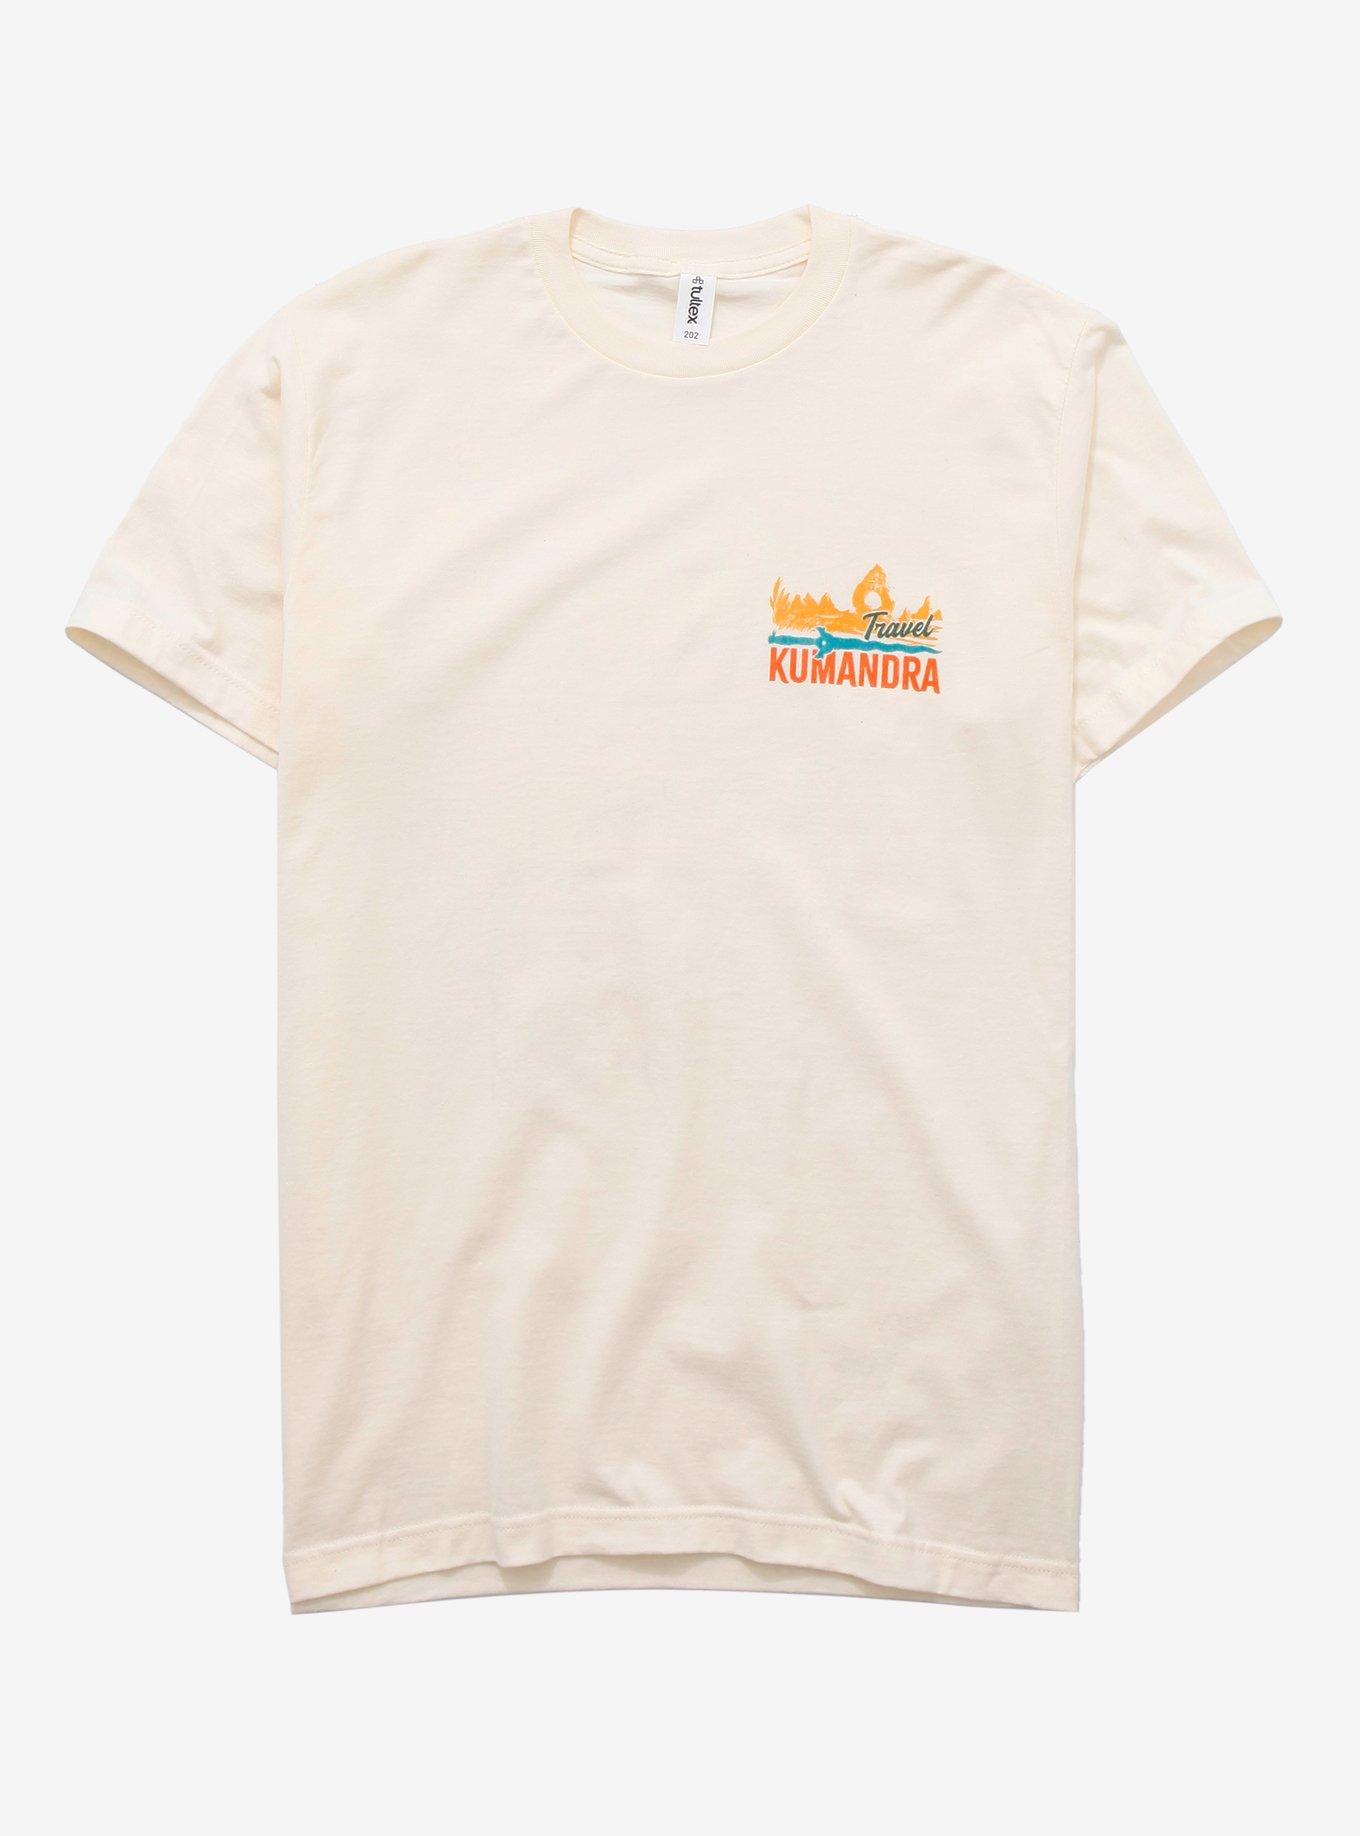 Disney Raya And The Last Dragon Travel Kumandra T-Shirt | Hot Topic